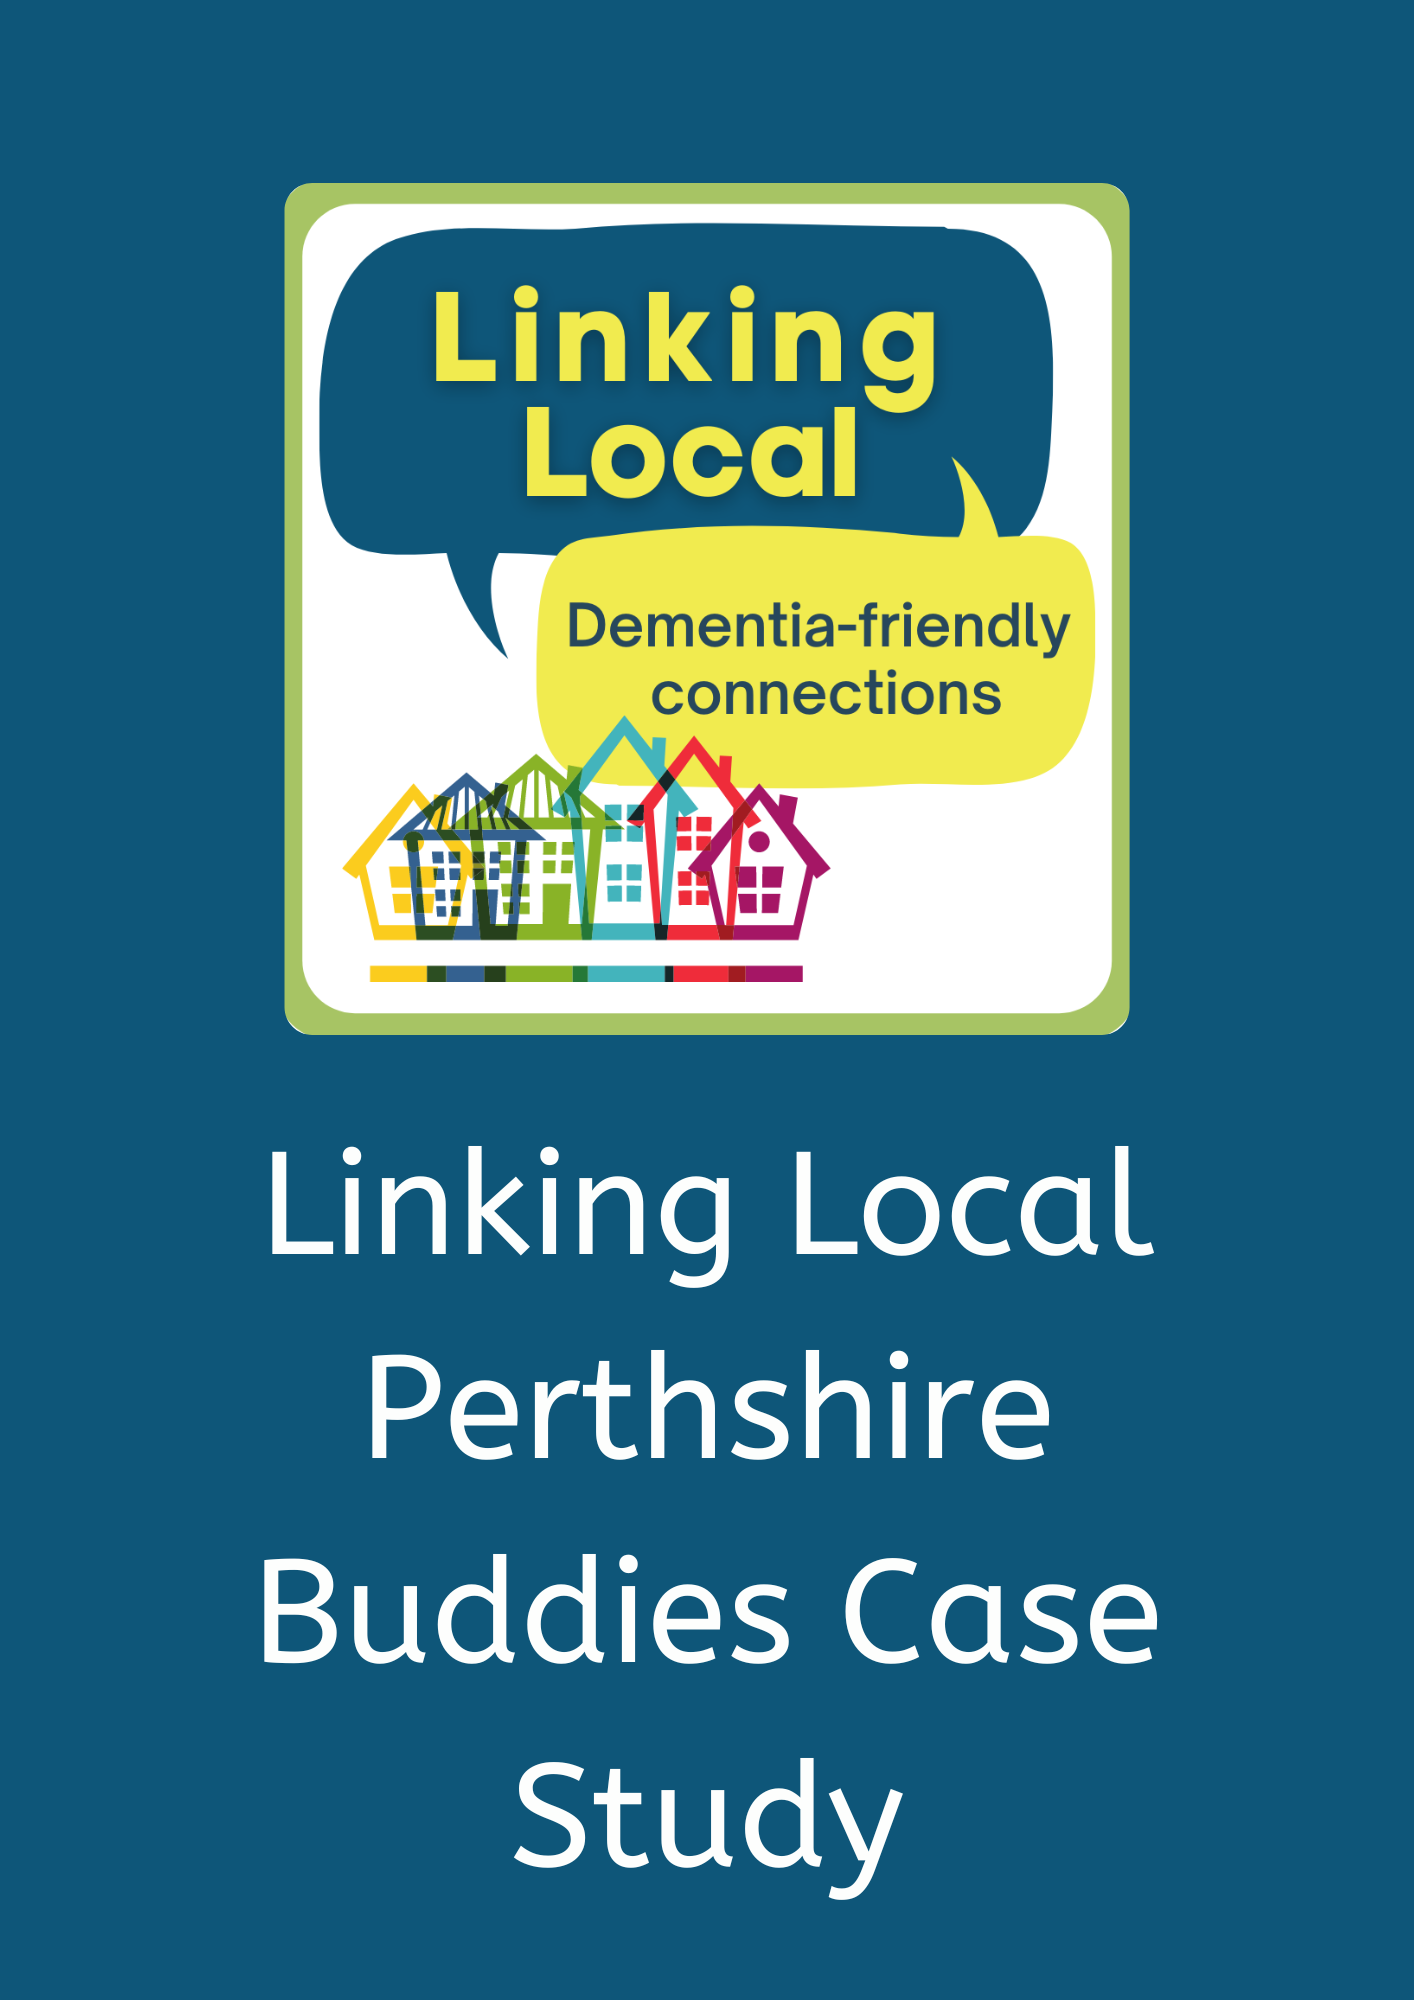 Linking Local Perthshire Buddies Case Study